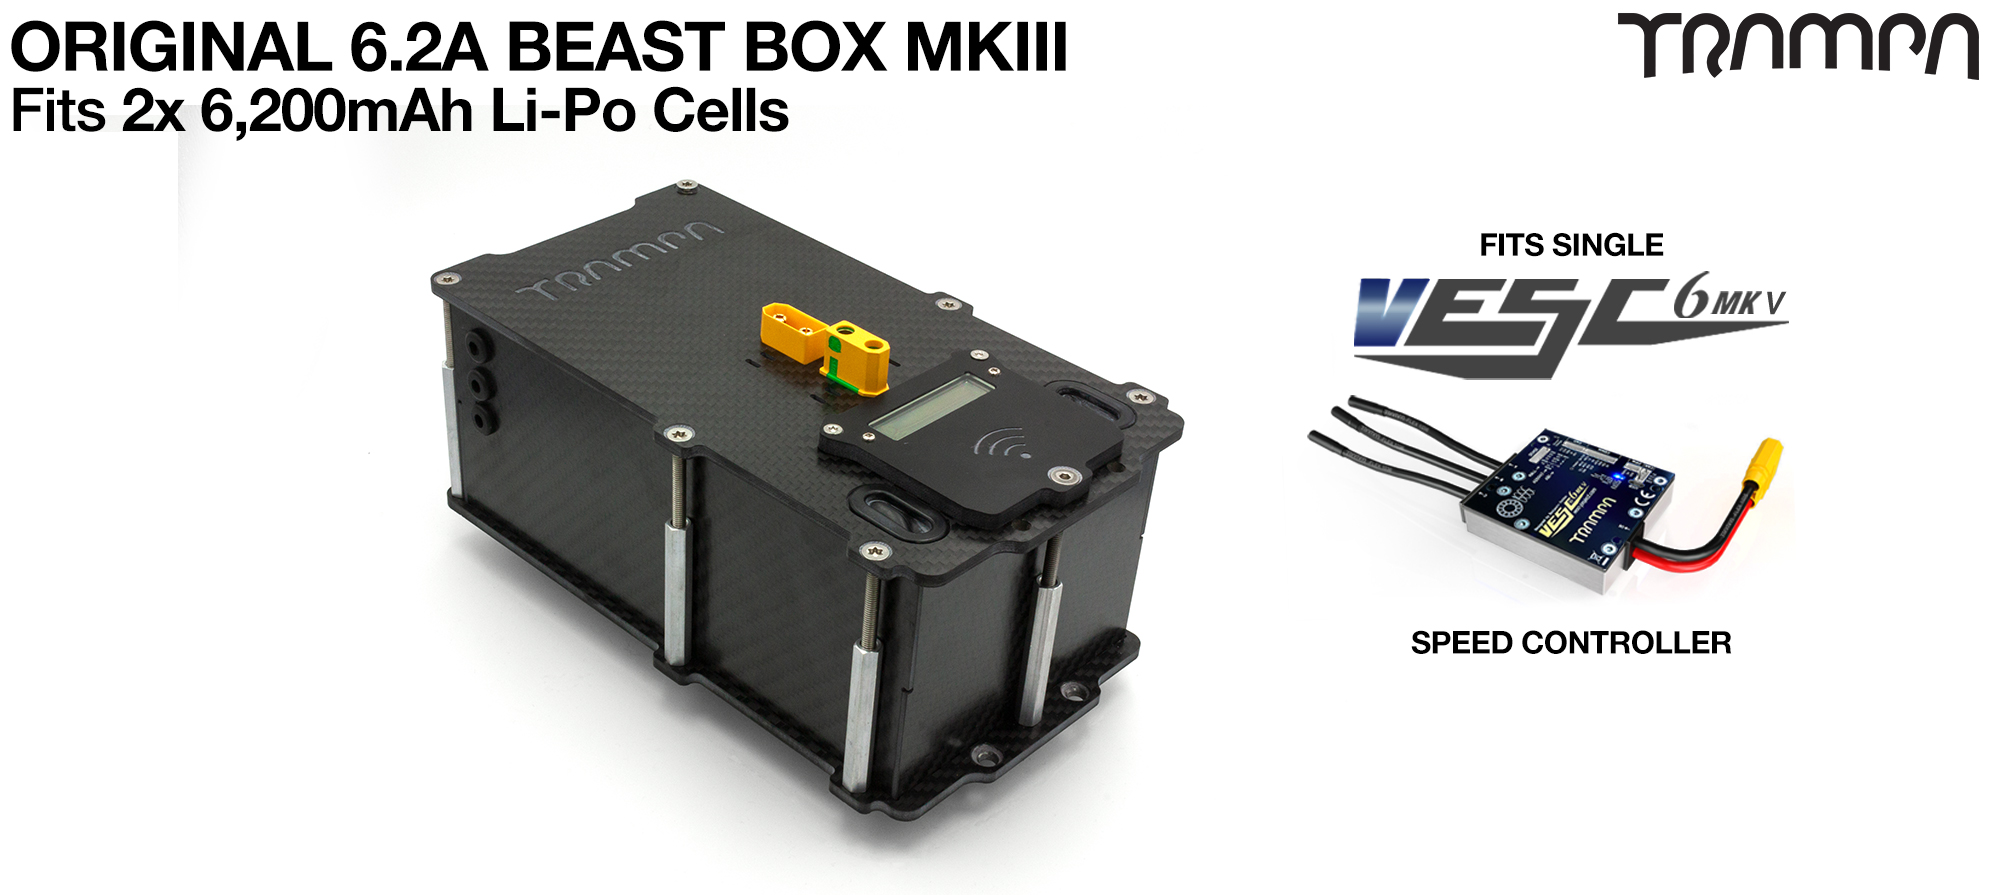 MkIII 6.2Ah BEAST Box fits 2x Zippy Compact 6200 mAh cells with Internal VESC Housing  